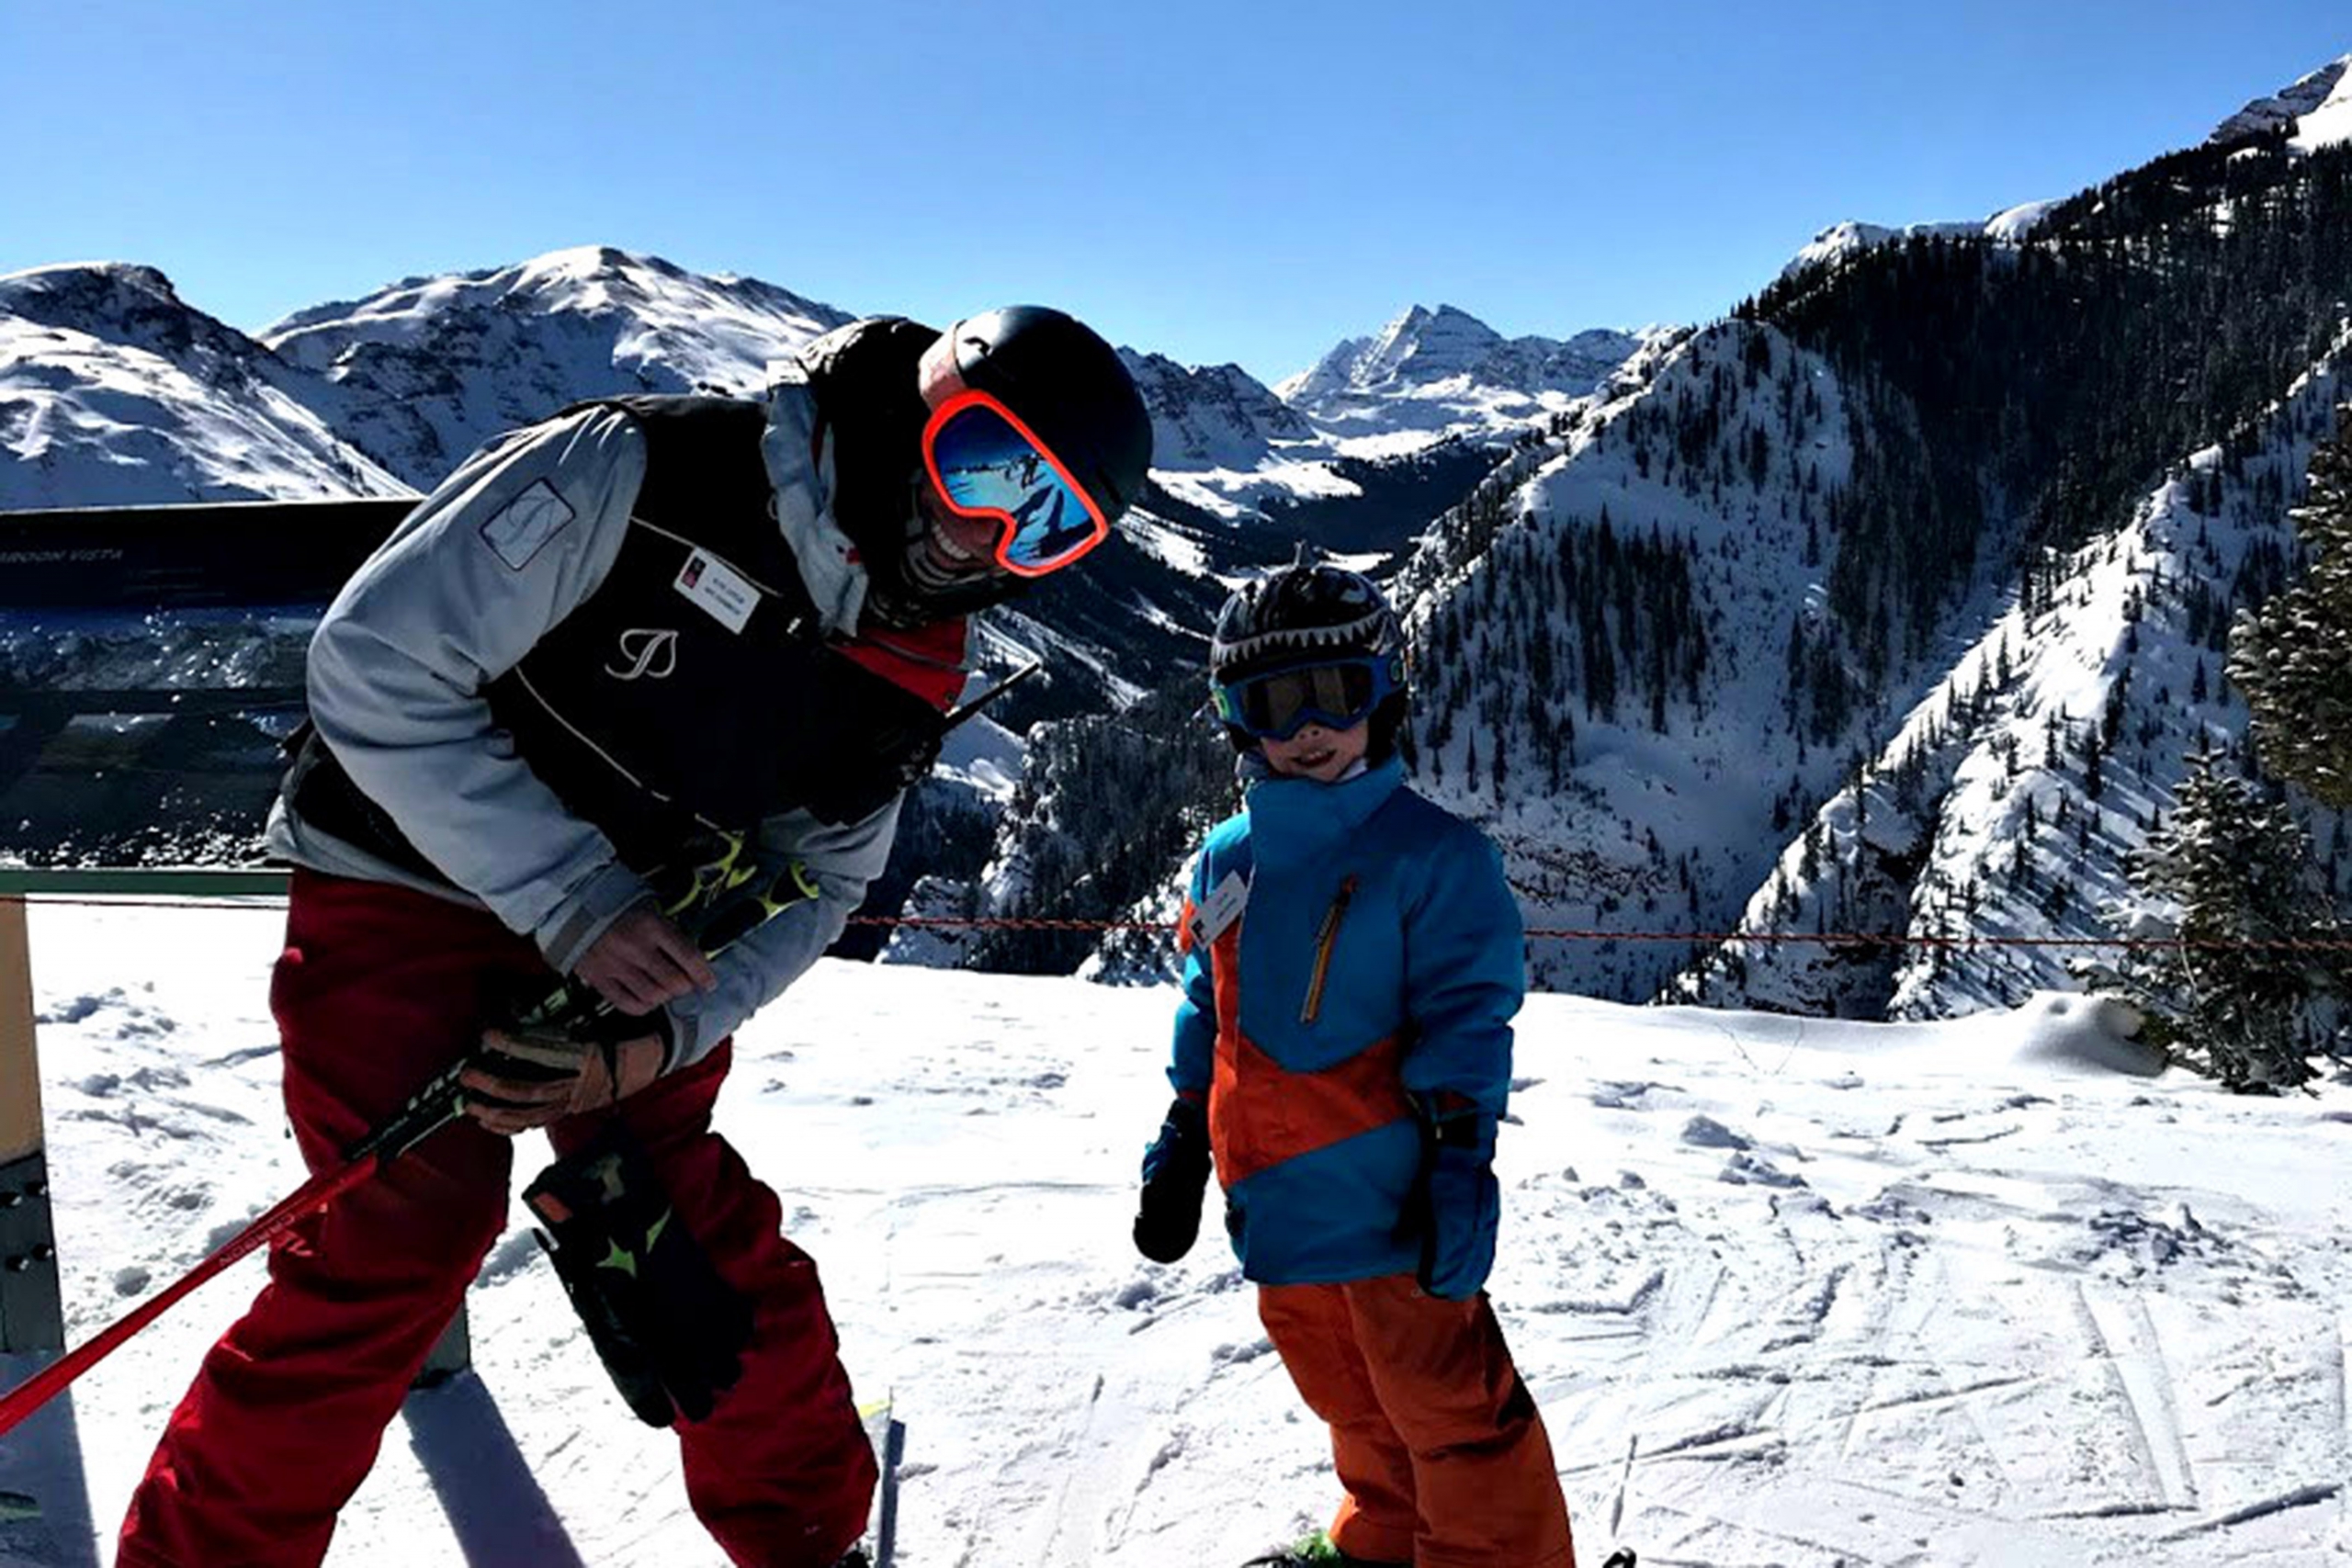 Aspen Snowmass ski instructor Kevin Jordan and his son